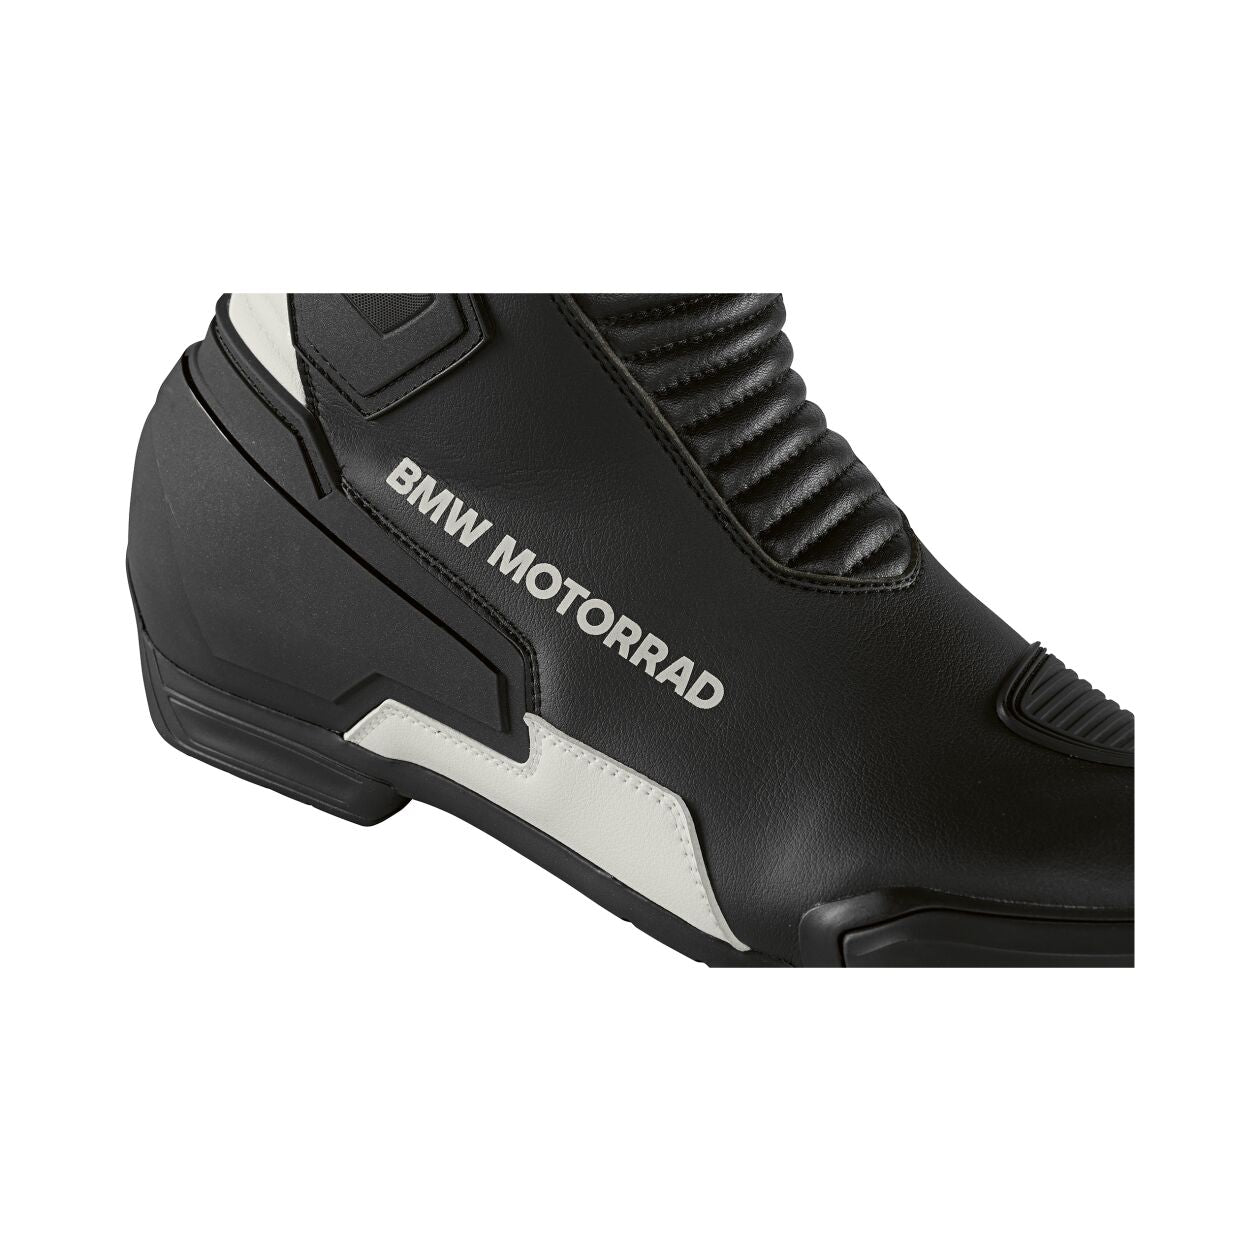 BMW Motorrad Pro Race GTX Boots